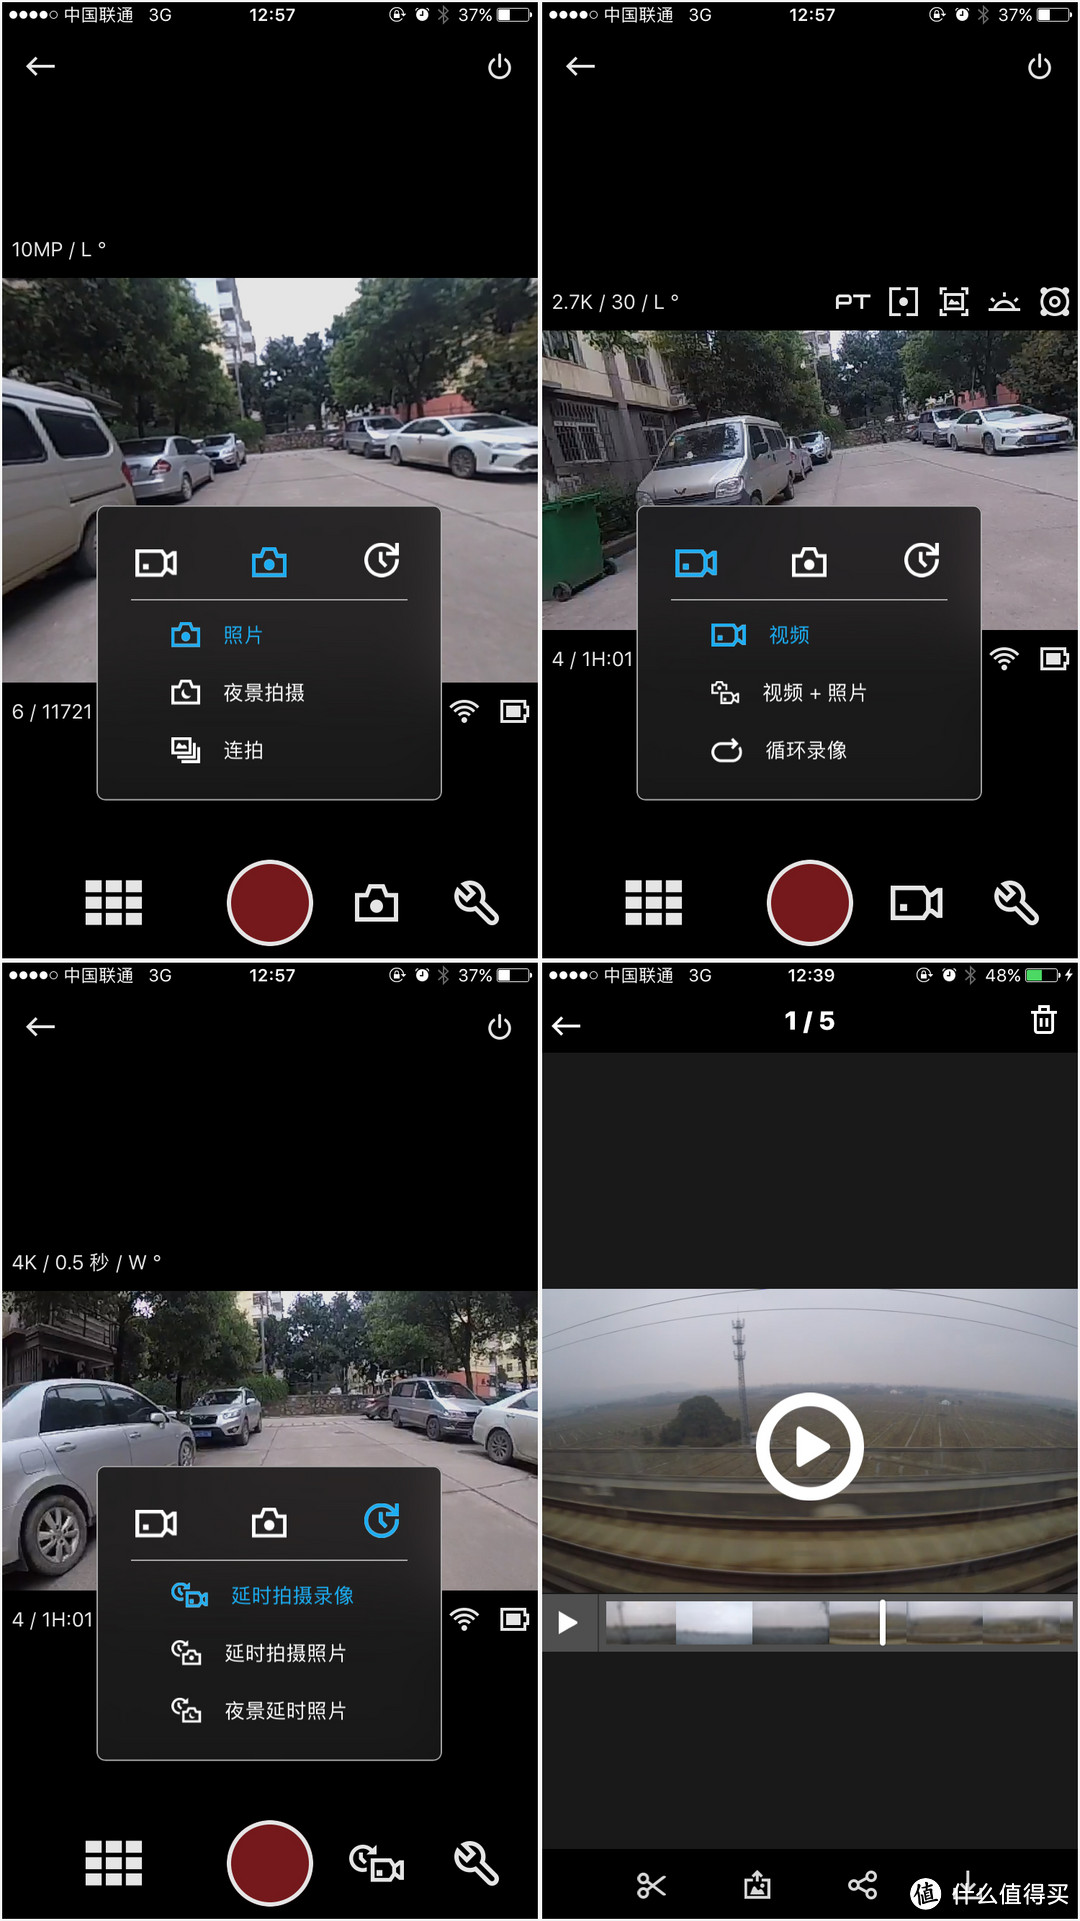 小巧实用：GoPro hero5 session运动摄像机 评测